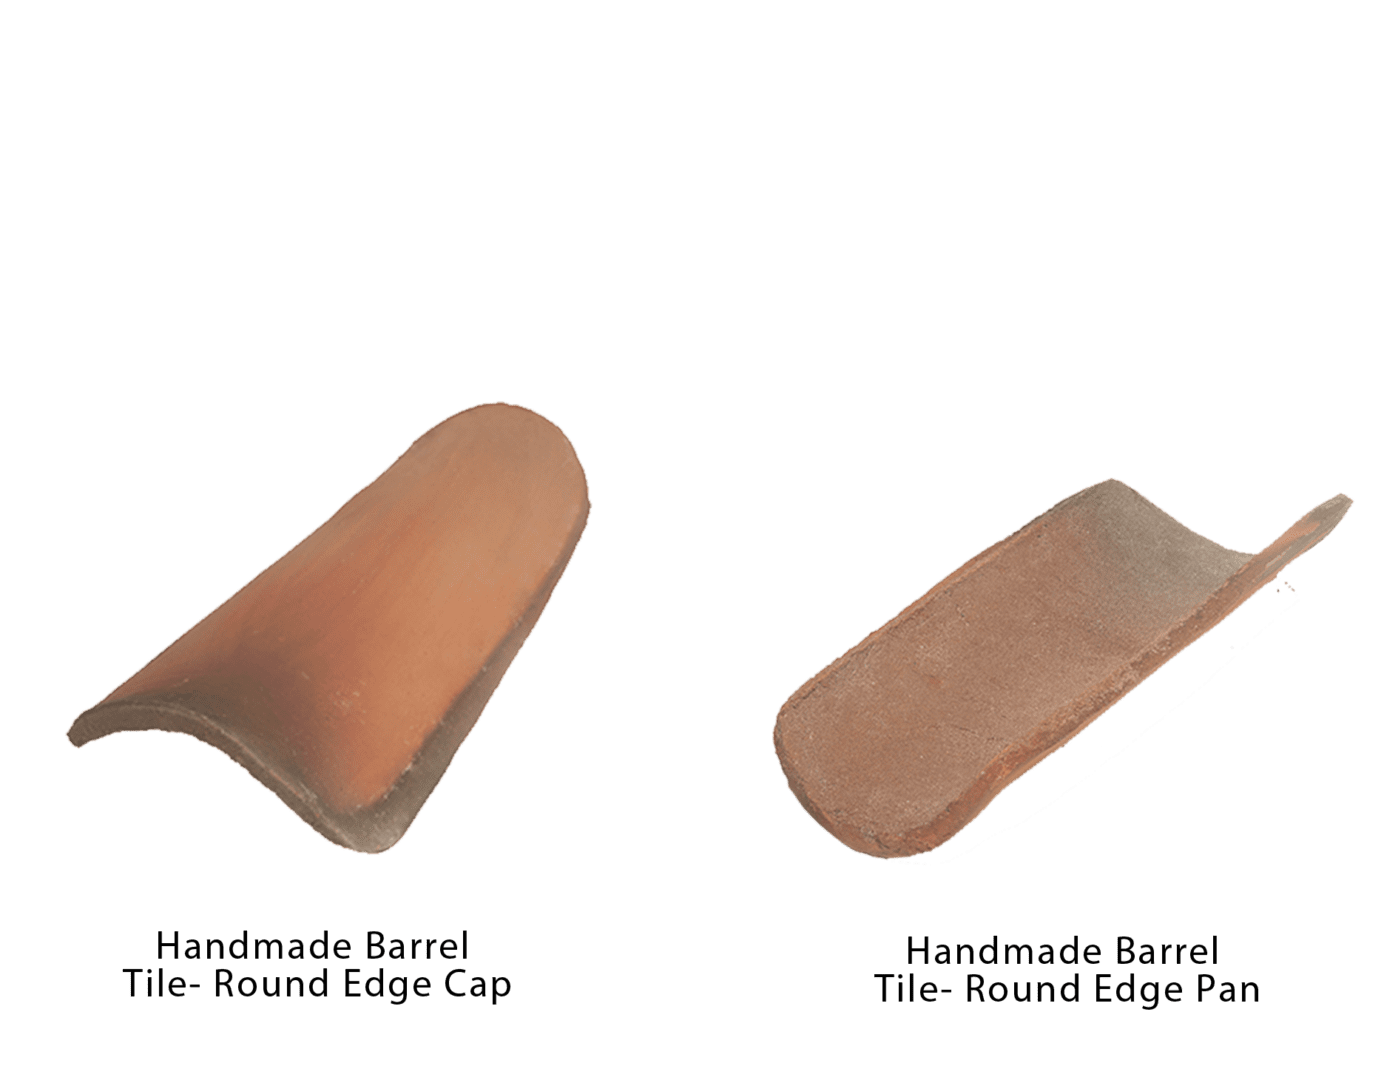 Handmade barrel tile – round edge pan